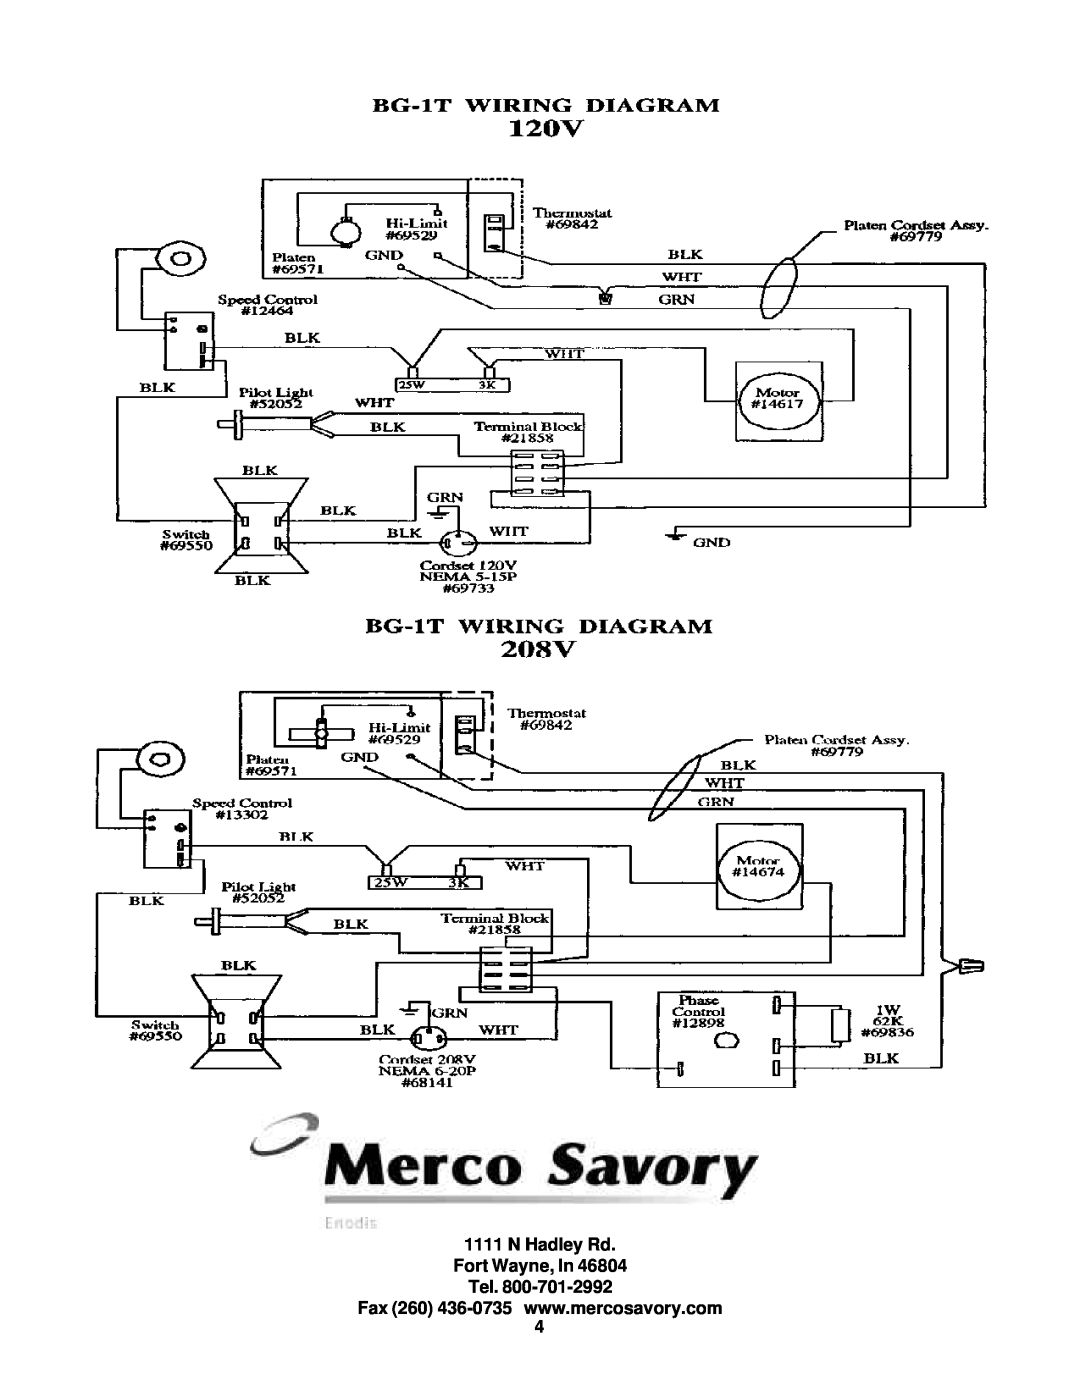 Merco Savory BG-1T operation manual N Hadley Rd Fort Wayne, In Tel 